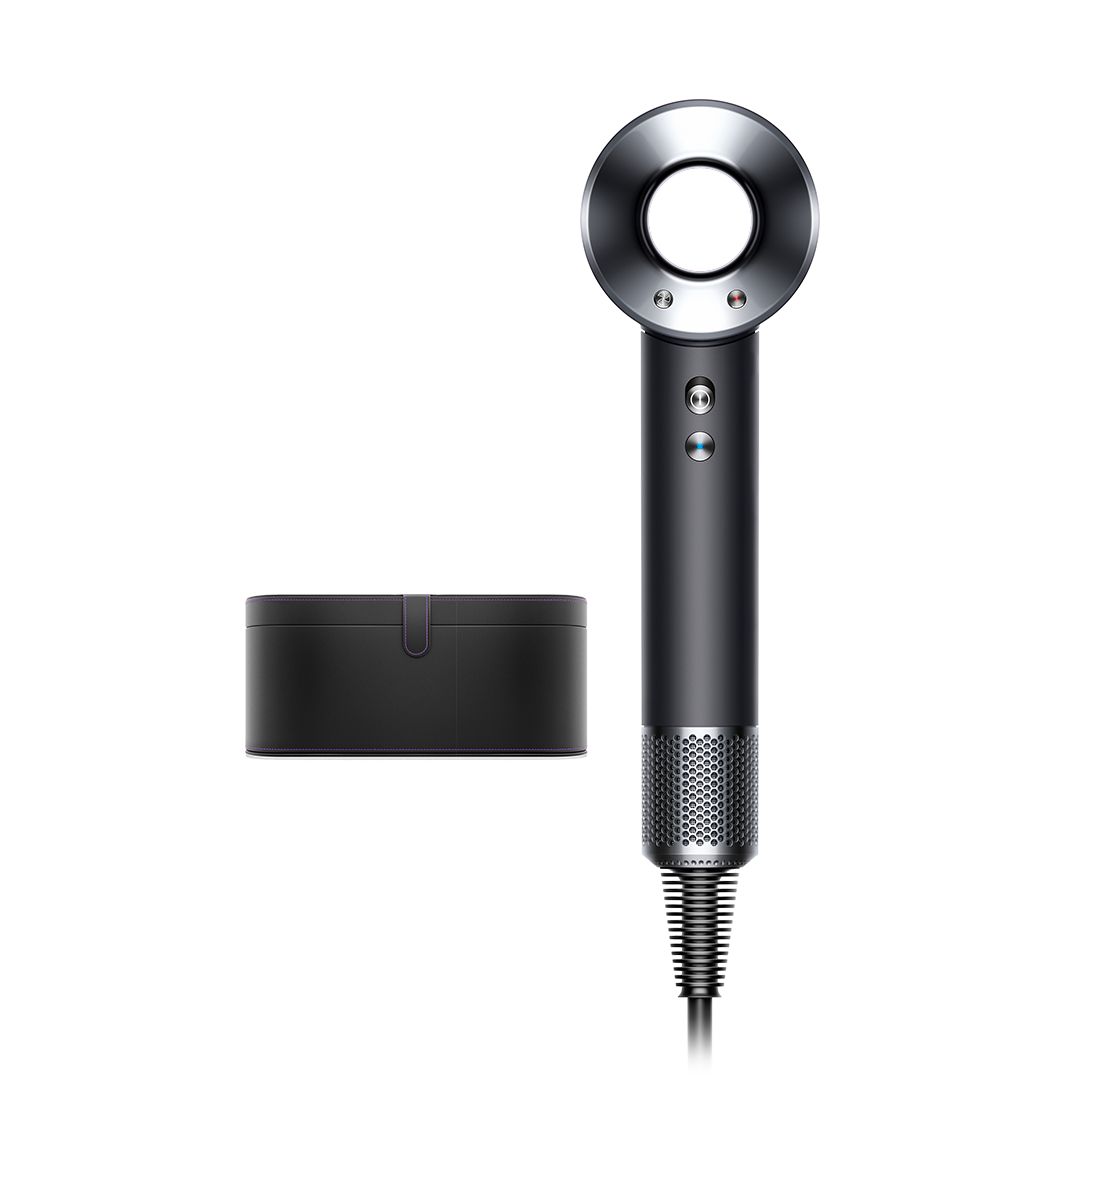 Dyson Supersonic™ hair dryer in black/nickel